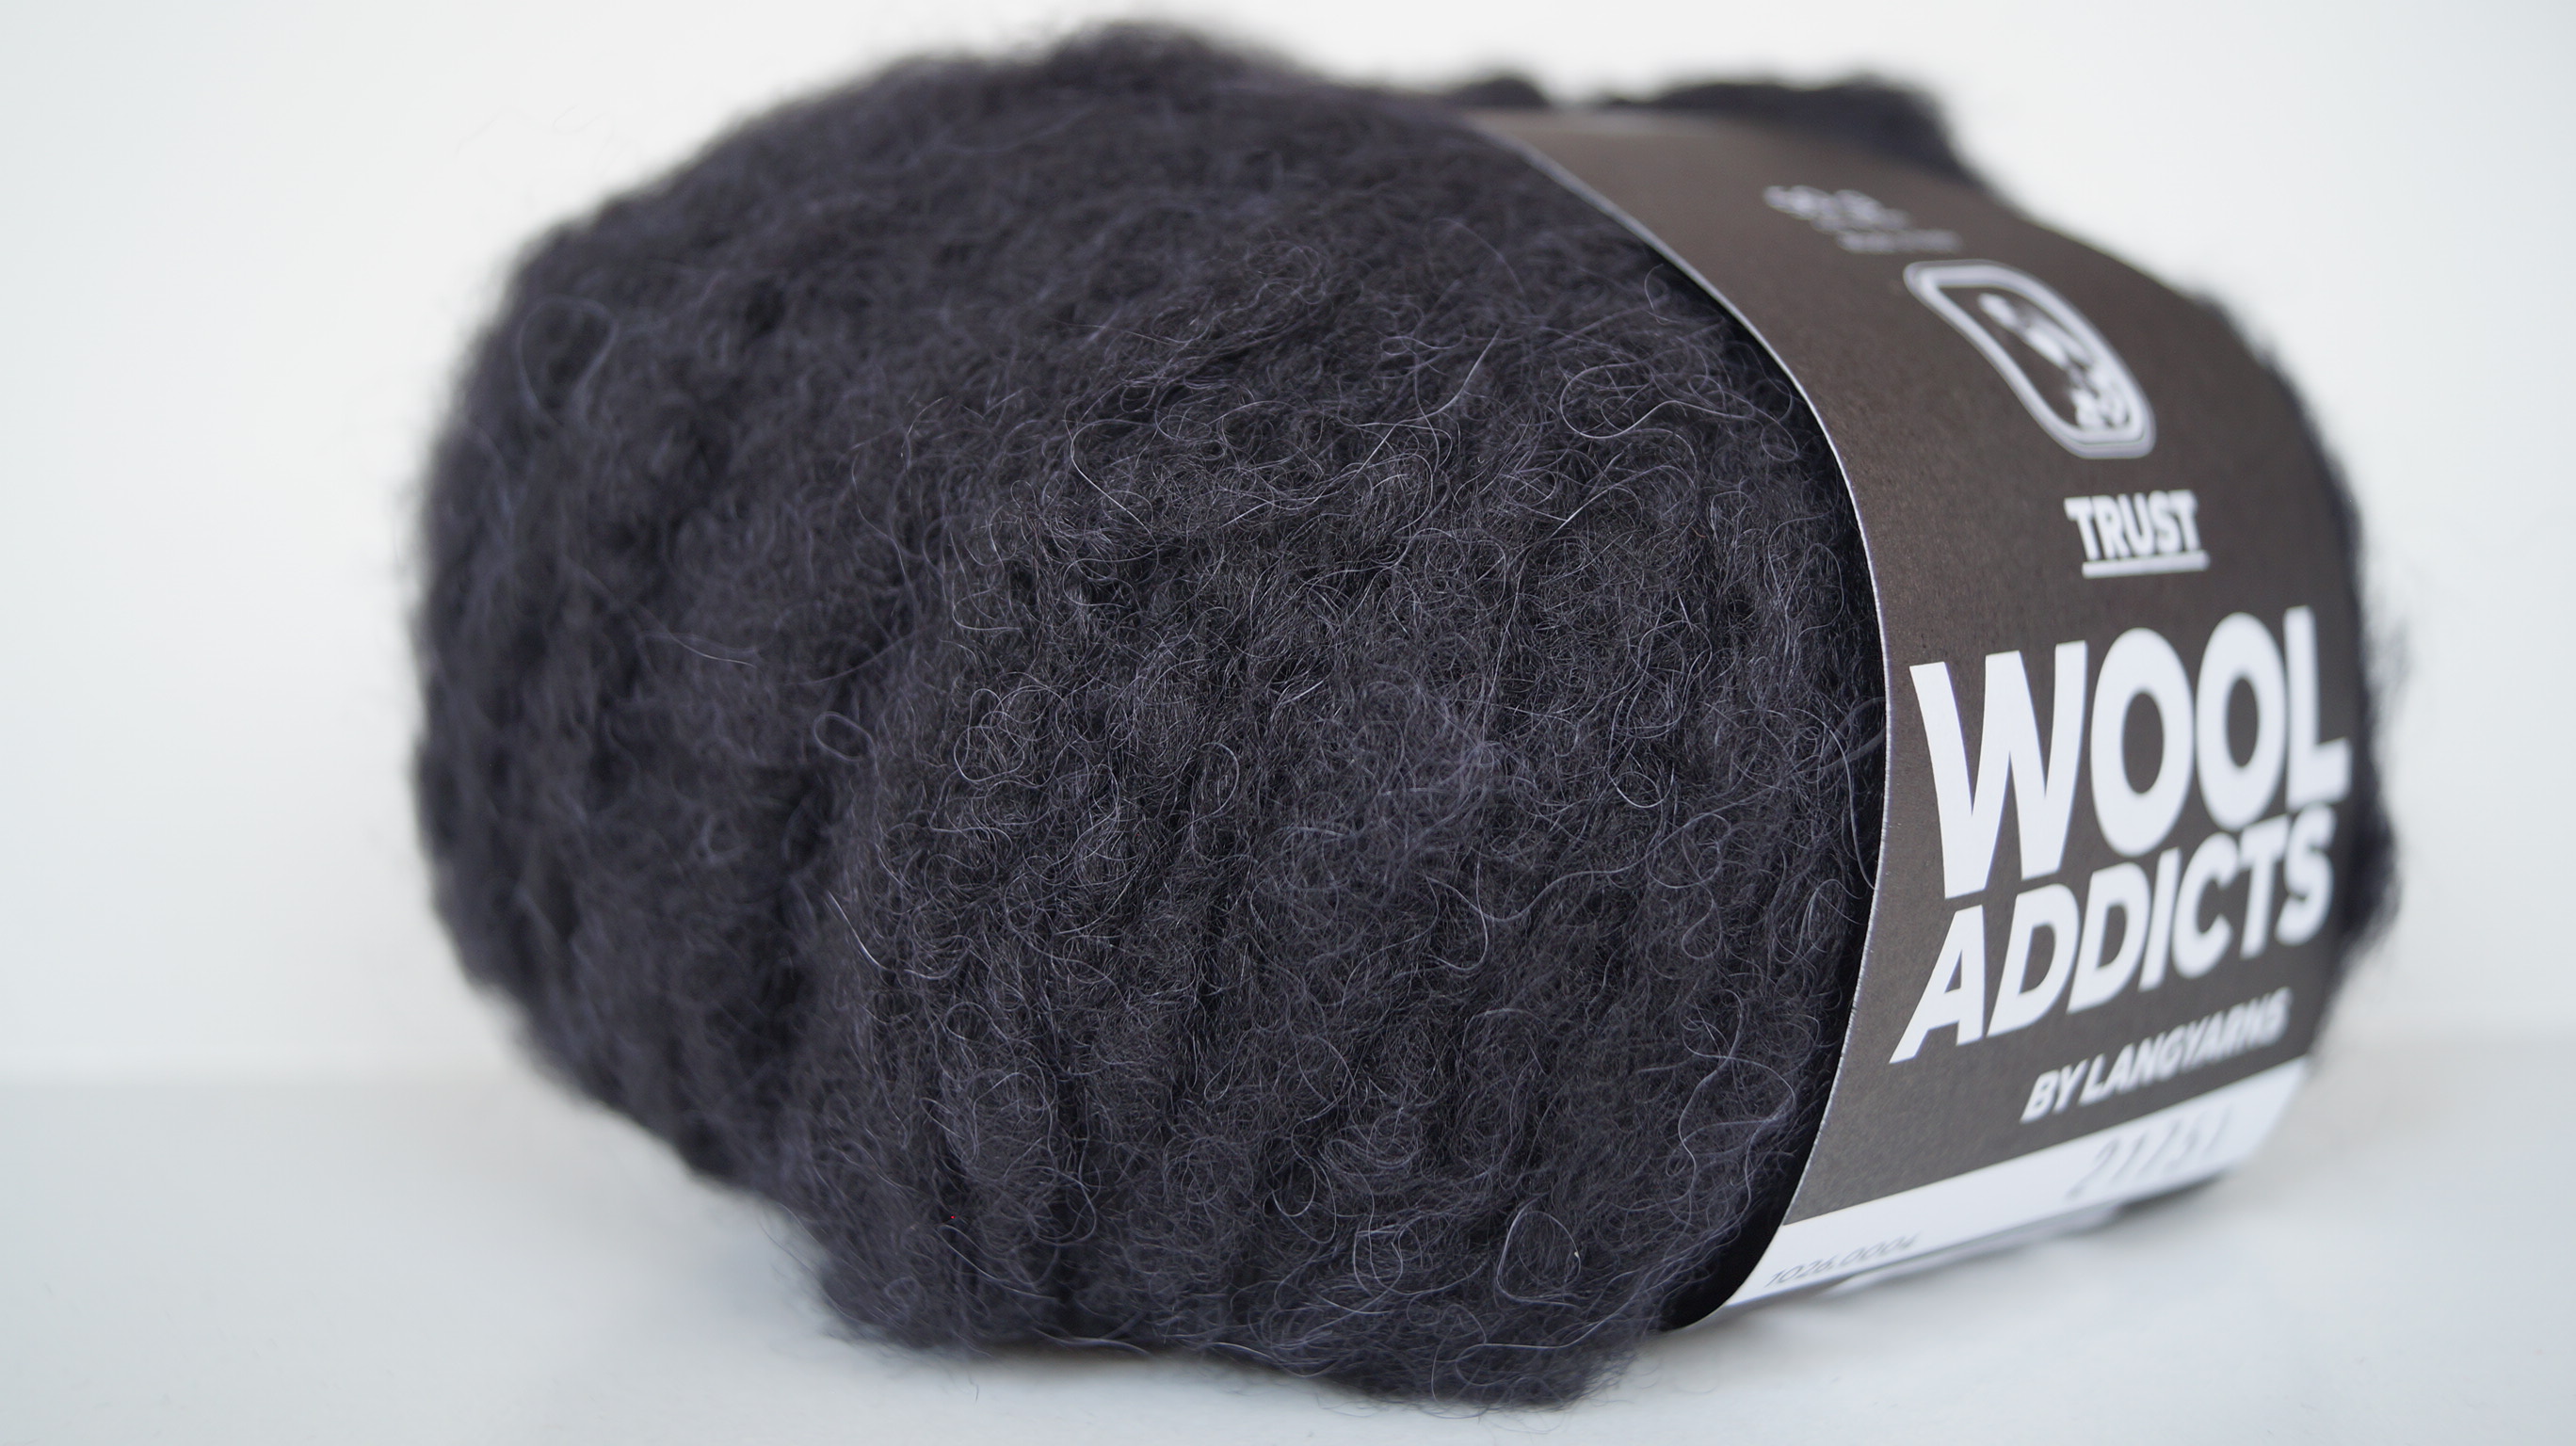 Lang Yarns Trust wool addicts